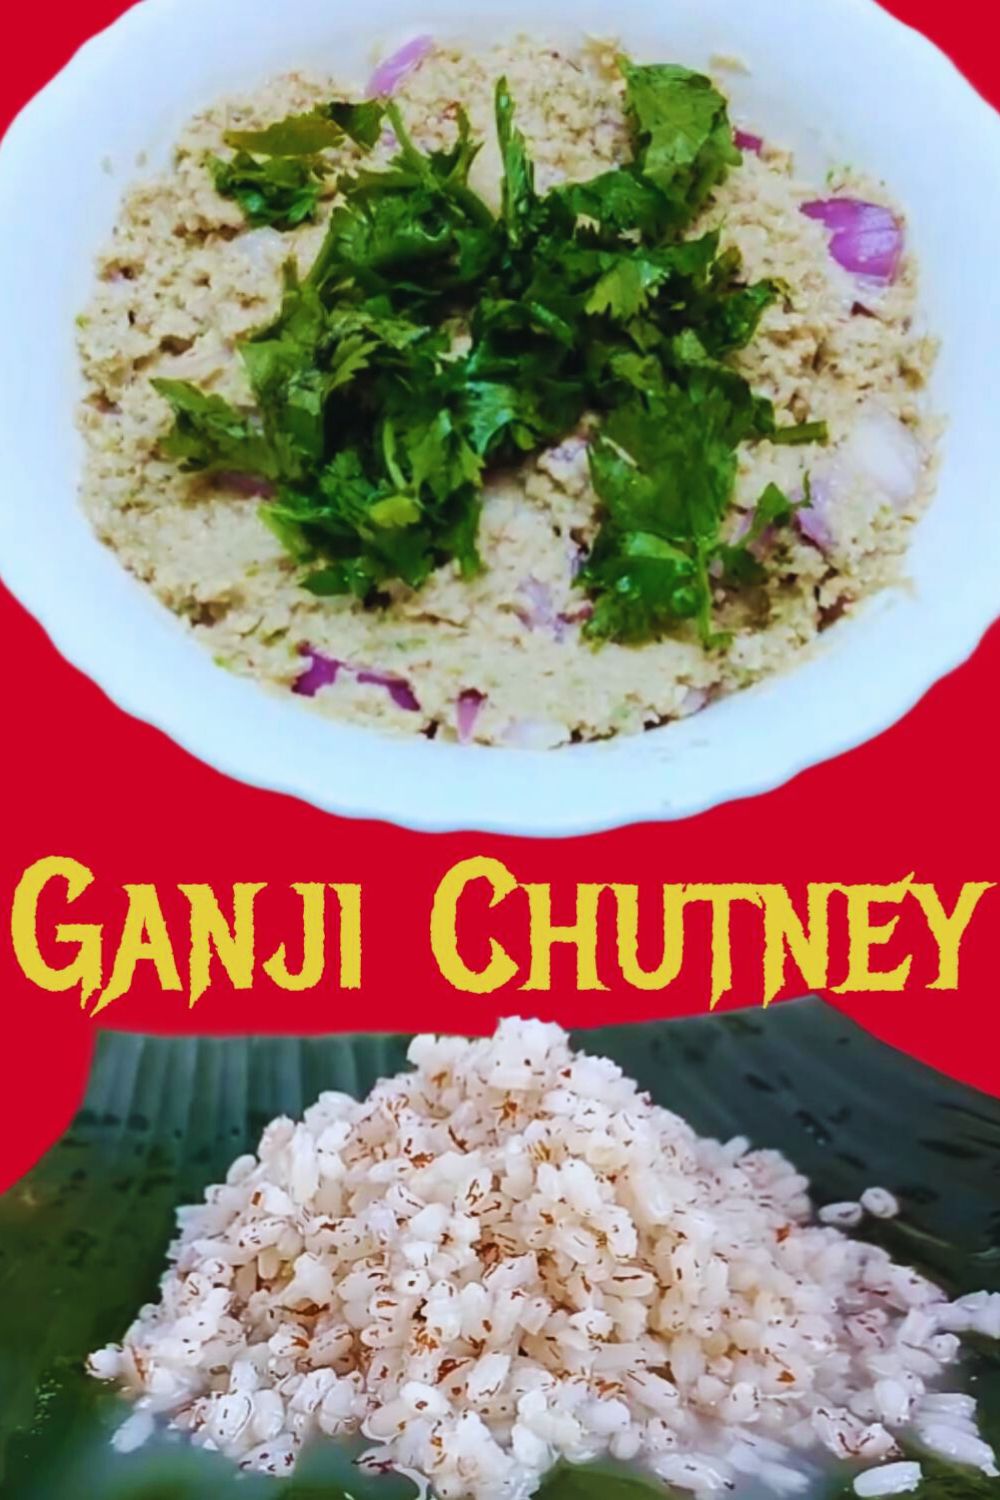 Ganji Chutney